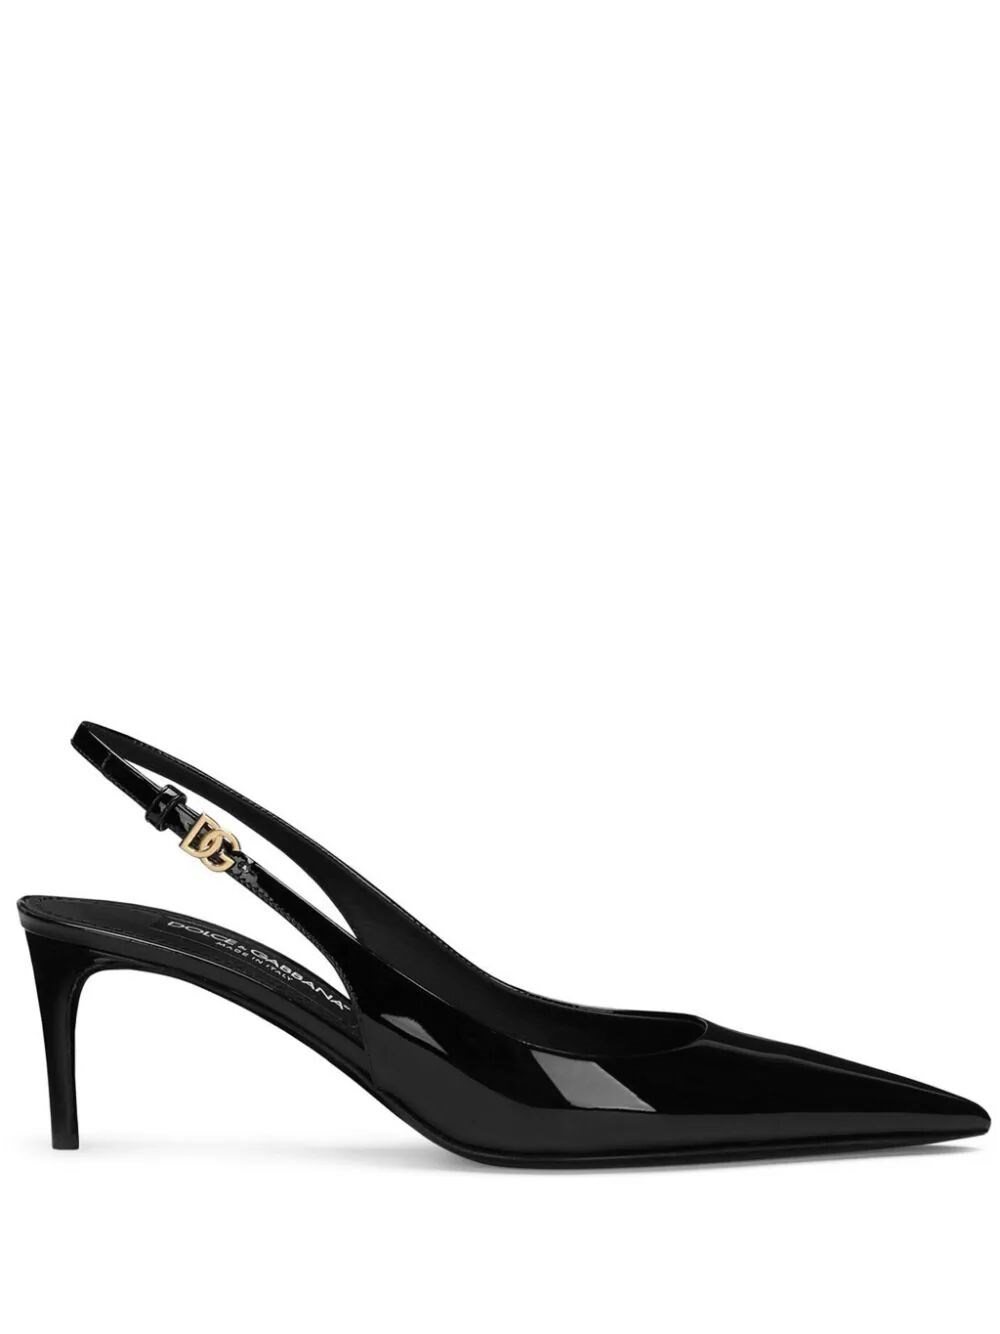 Dolce & Gabbana Patent Leather Slingback In Black